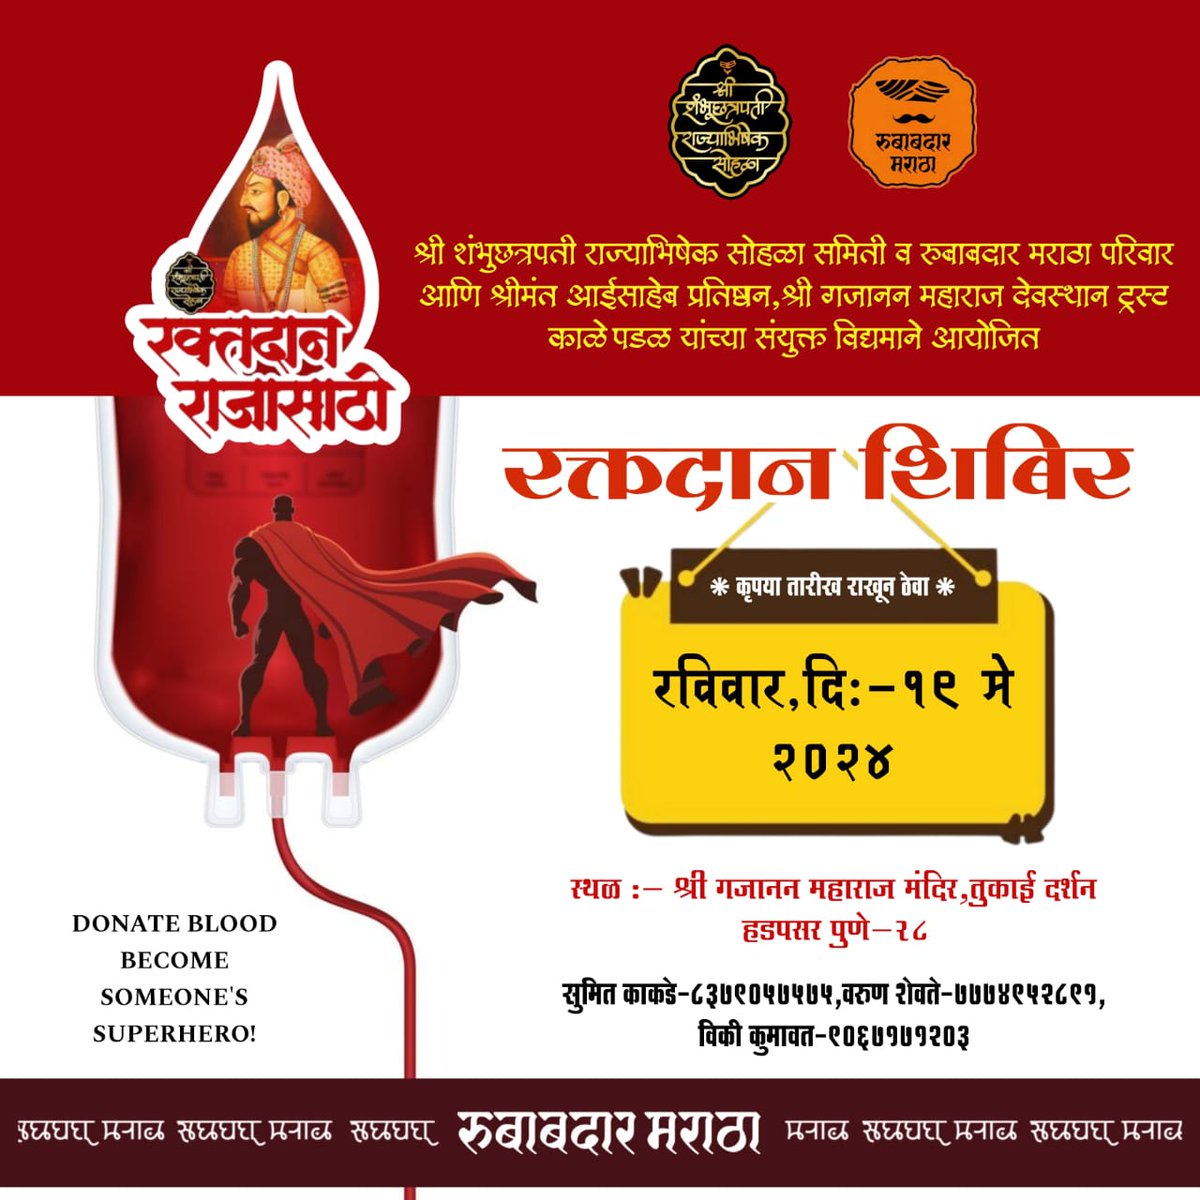 #Pune #Blood #Donation Camp 

Date: 19 May 2024 
Time: 9 am to 6 pm 
Venue: Gajanan Maharaj Mandir, Kalepadal, Hadapsar, Pune

#blood4pune
#lcs4society @lcs4society 
@PuneriSpeaks @mi_puneri @thatPunekar